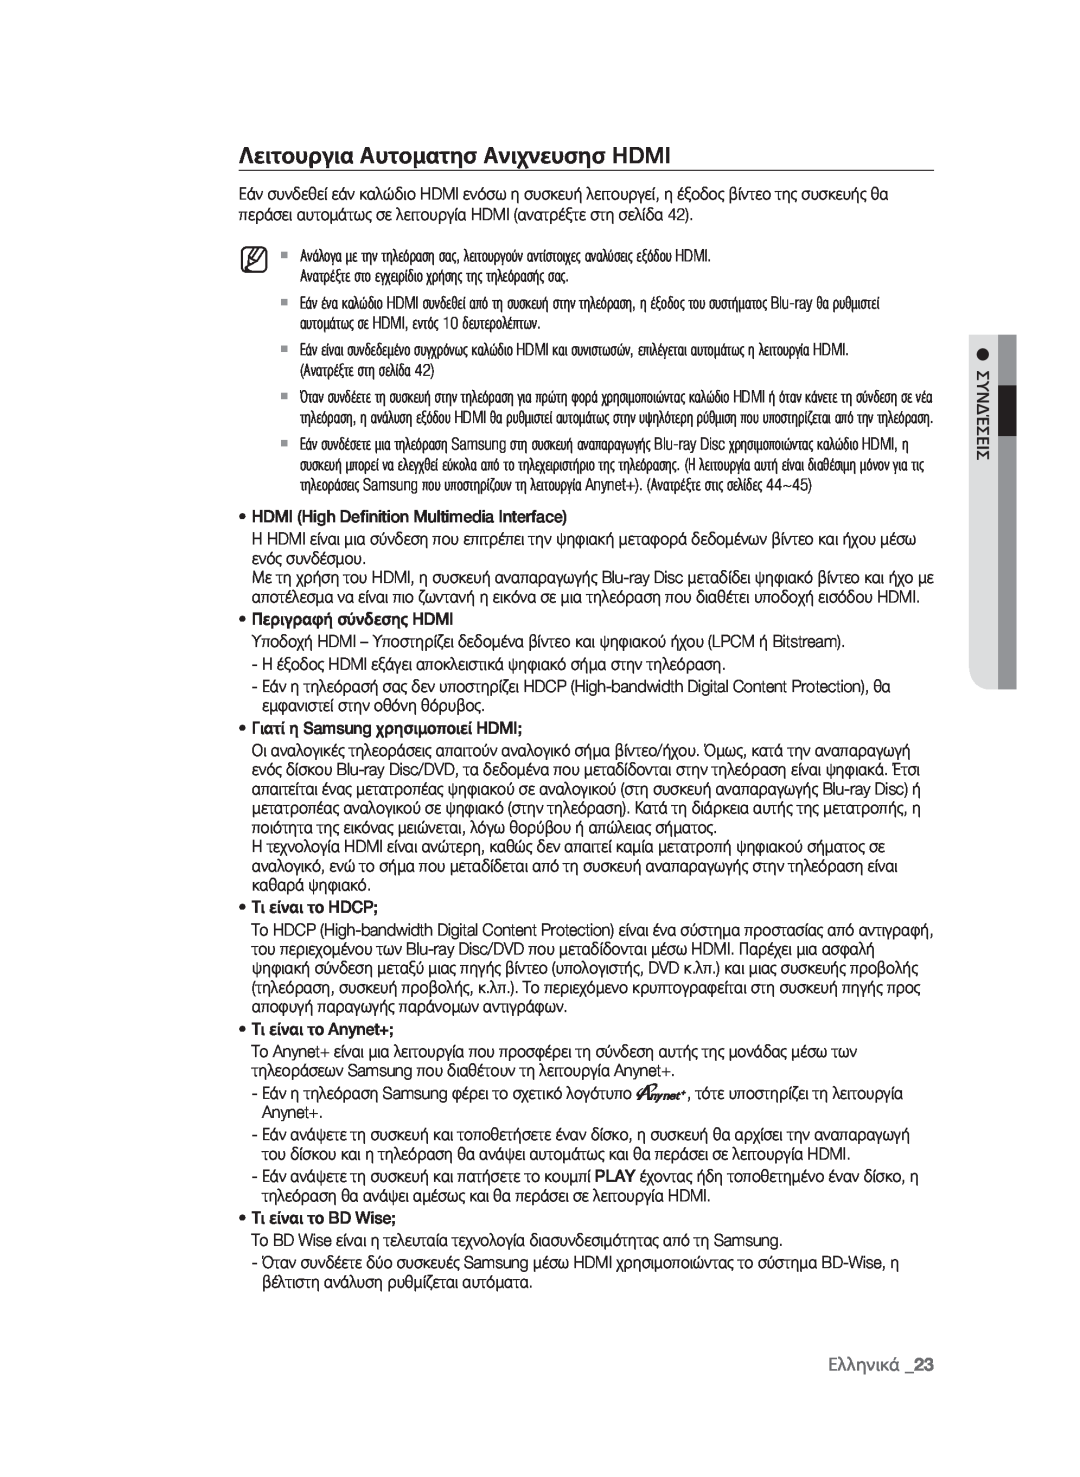 Samsung BD-P1580/EDC manual Λειτουργια Αυτοματησ Ανιχνευσησ HDMI, Ελληνικά 